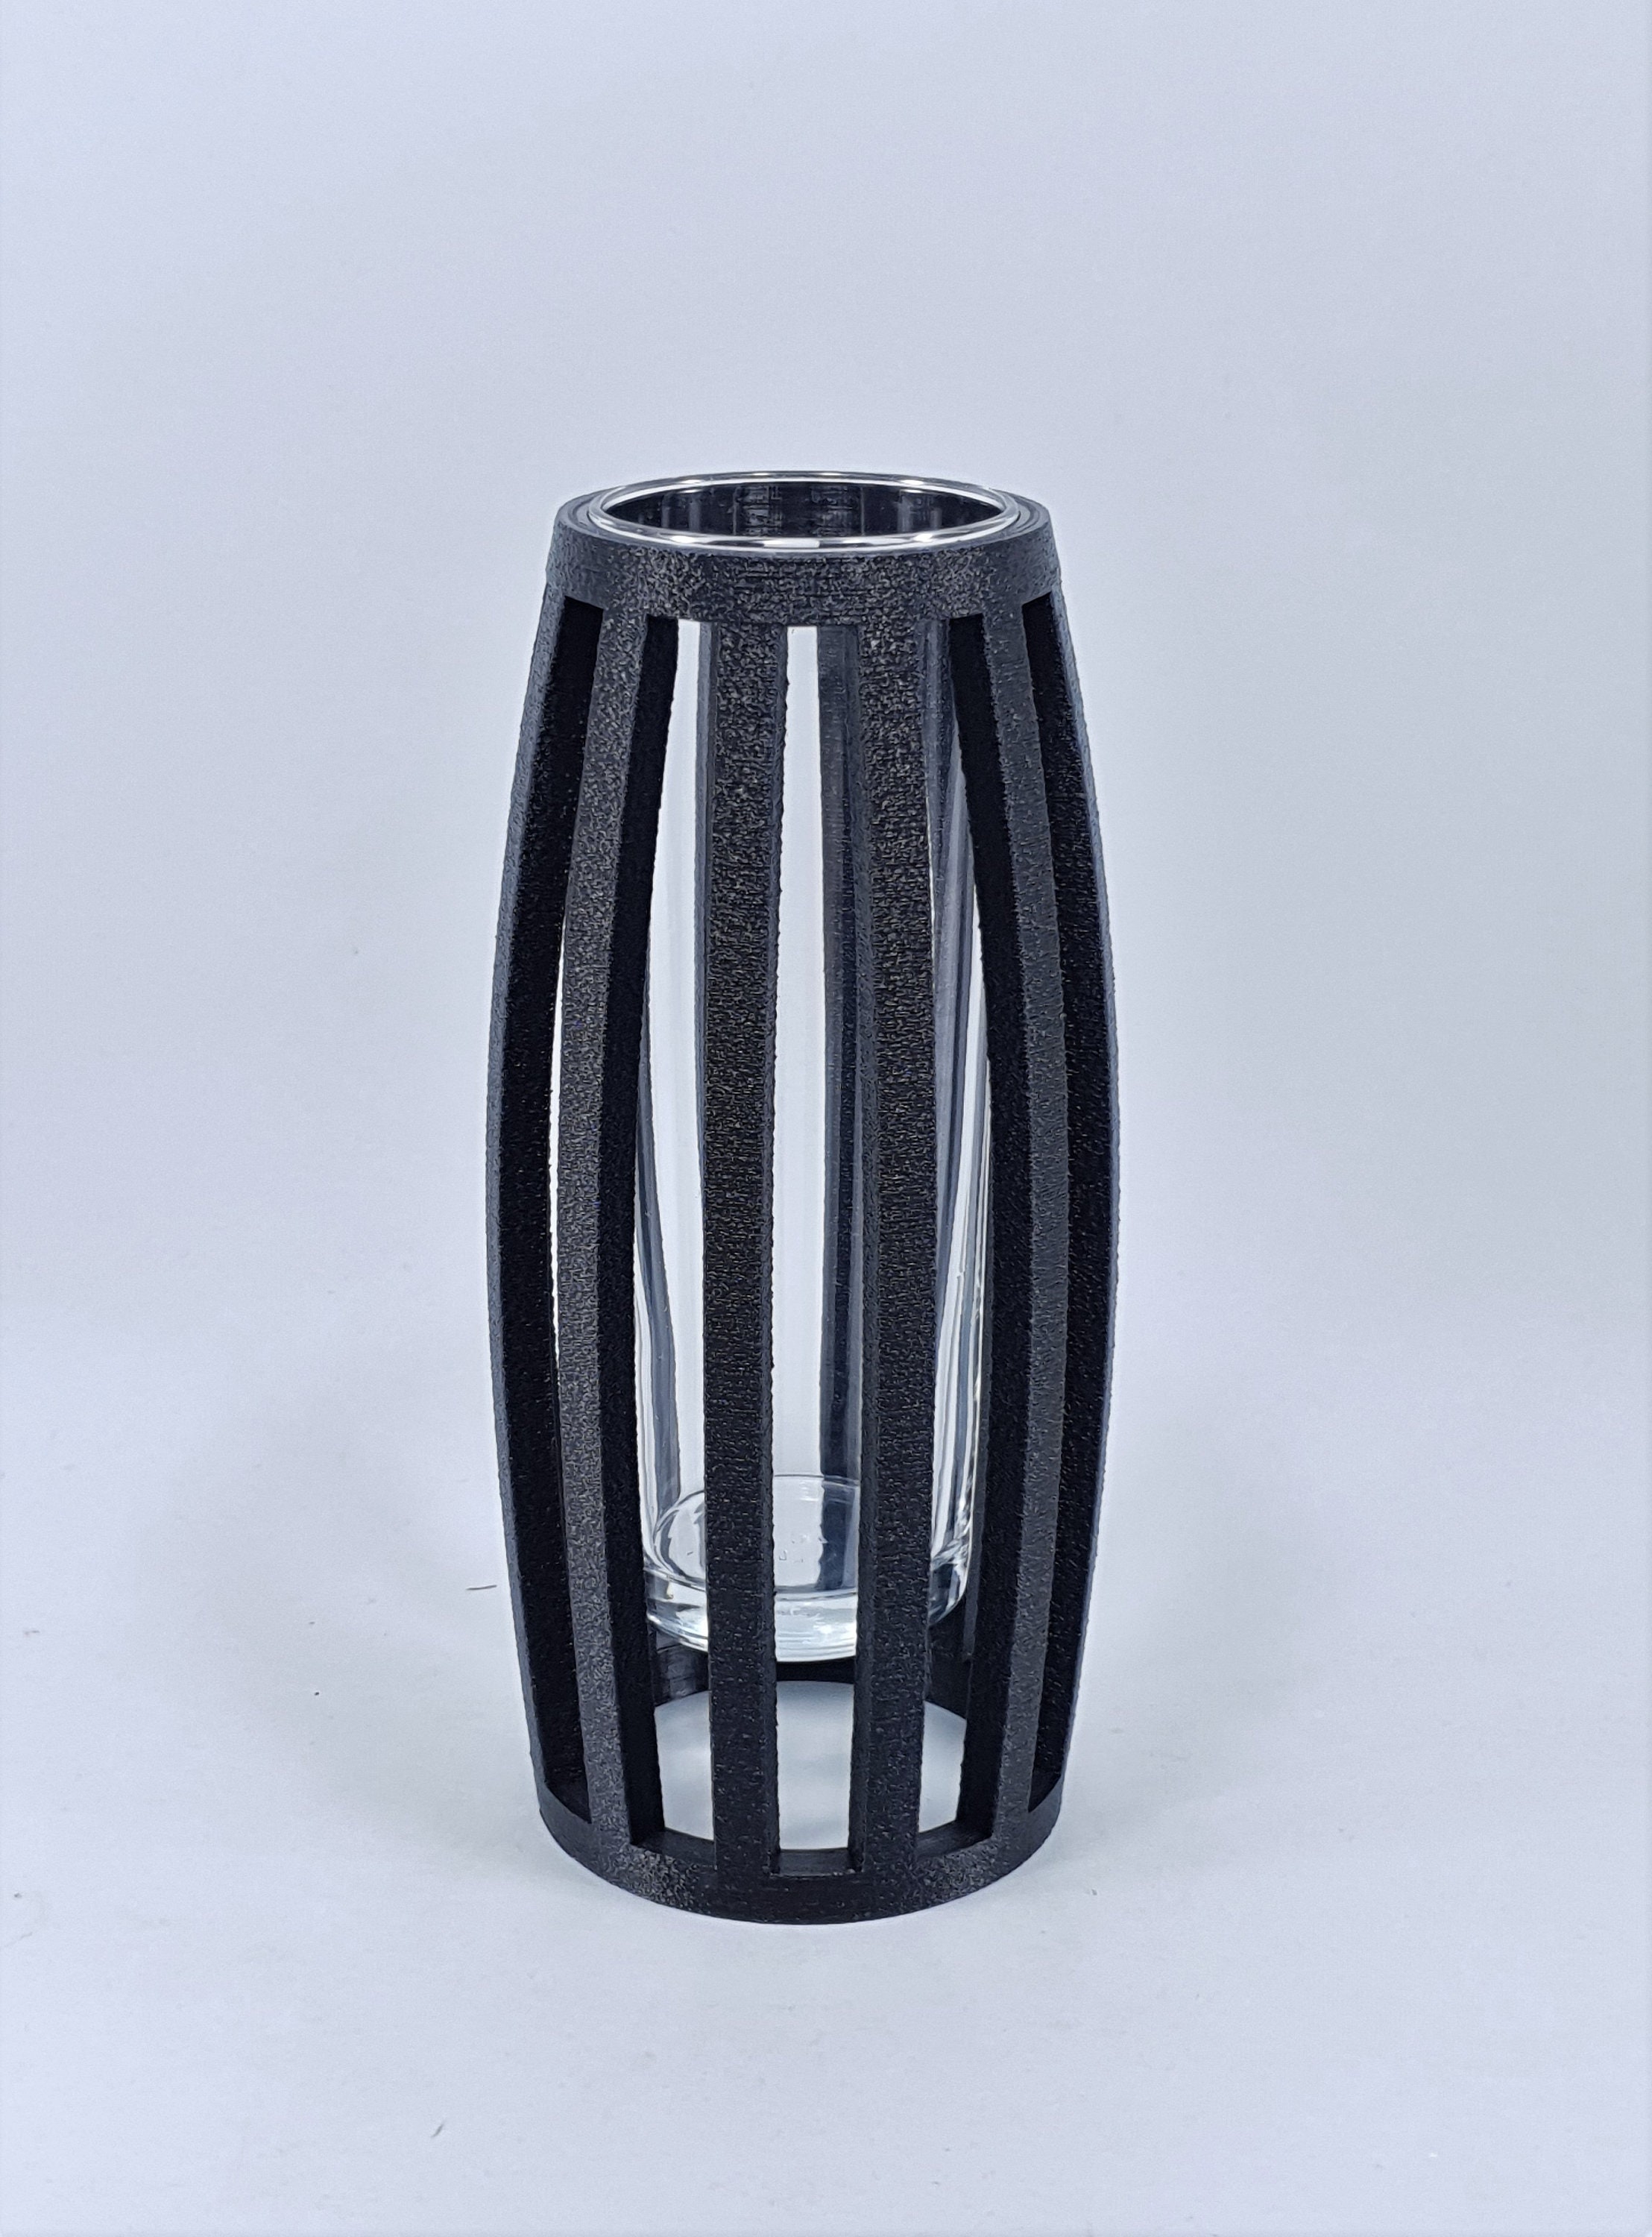 Goth Black Minimalist Style Glass Vase Propagation Station Dried